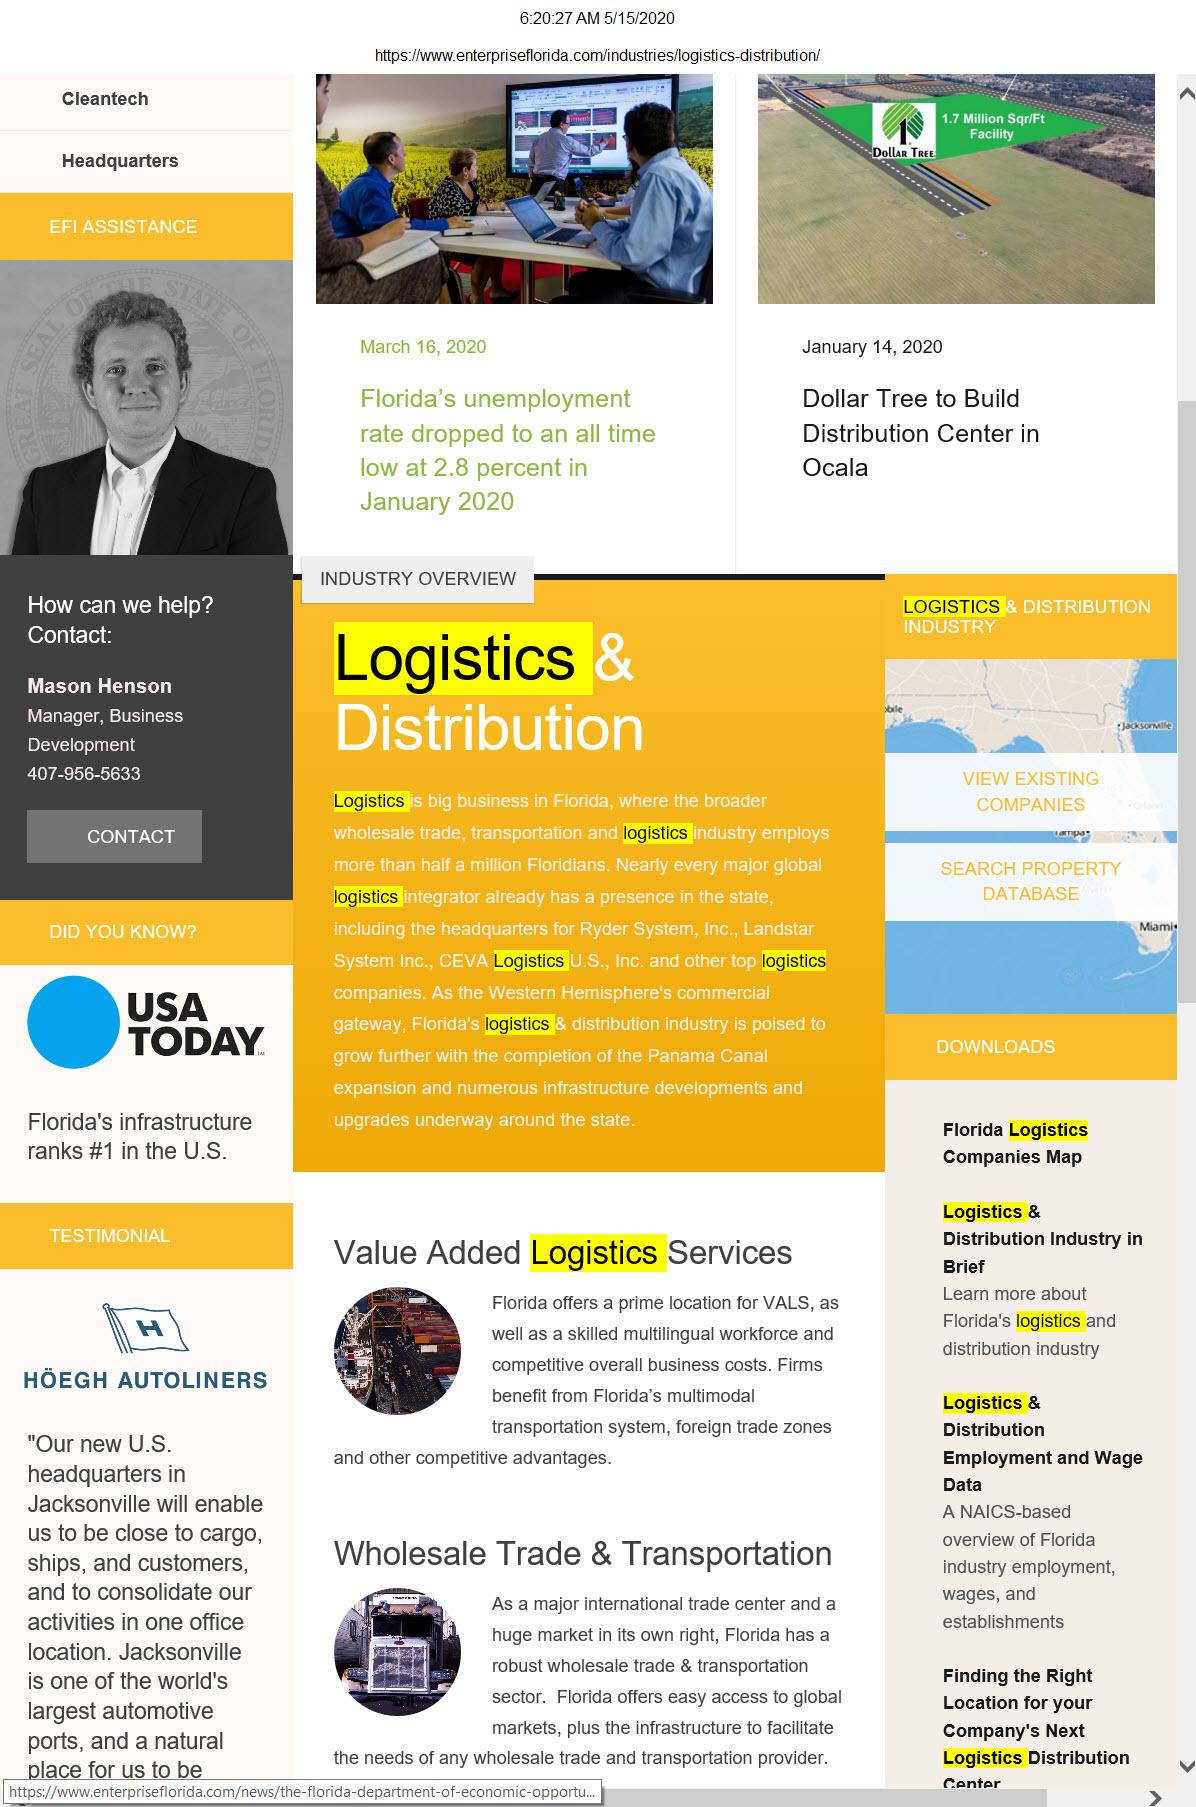 coda logistics and distribution